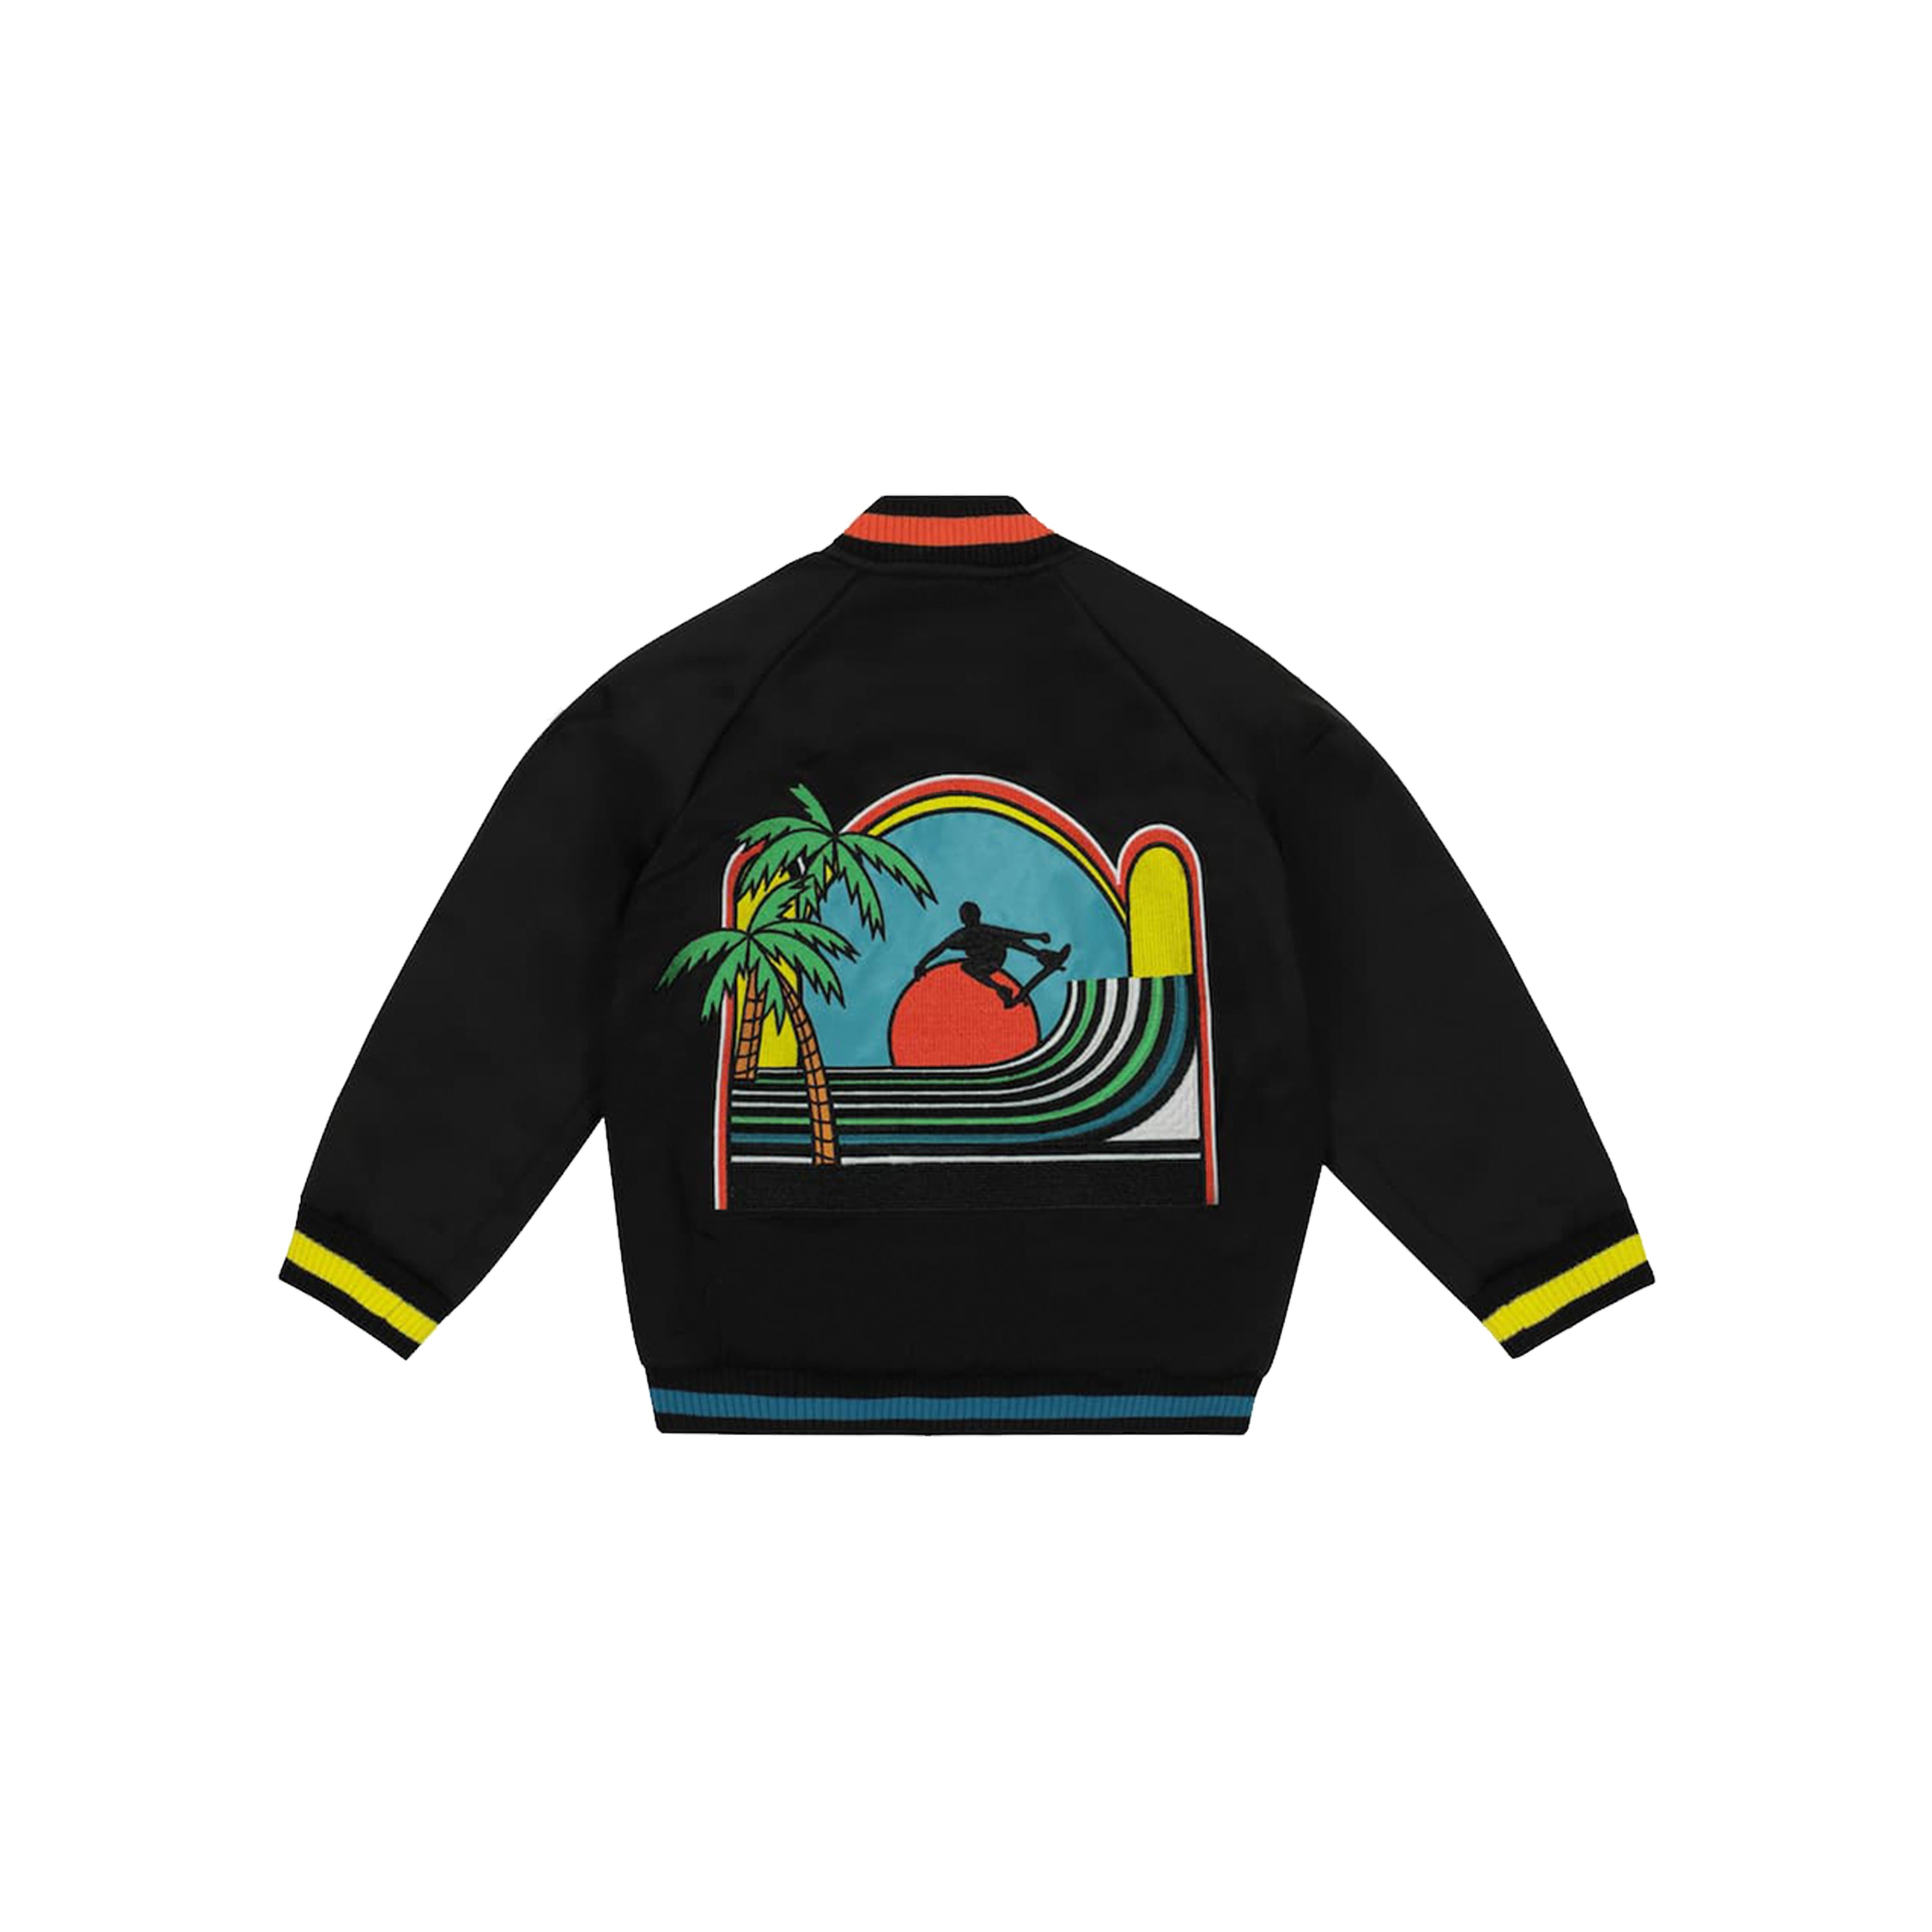 Boys Black Embroidered Jacket